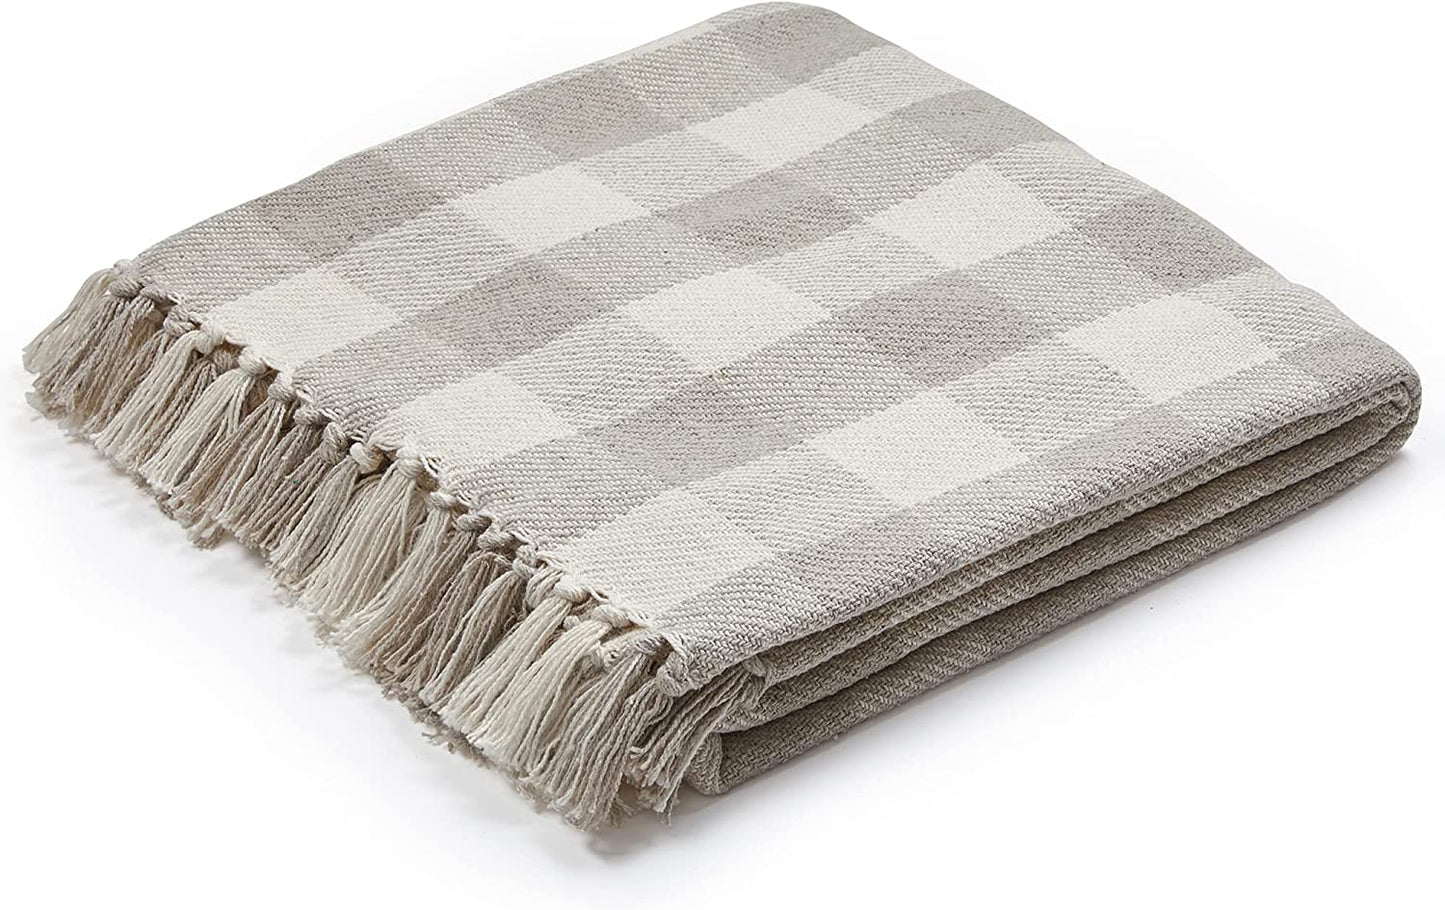 Neutral Lightweight Blanket for Farmhouse Decor.